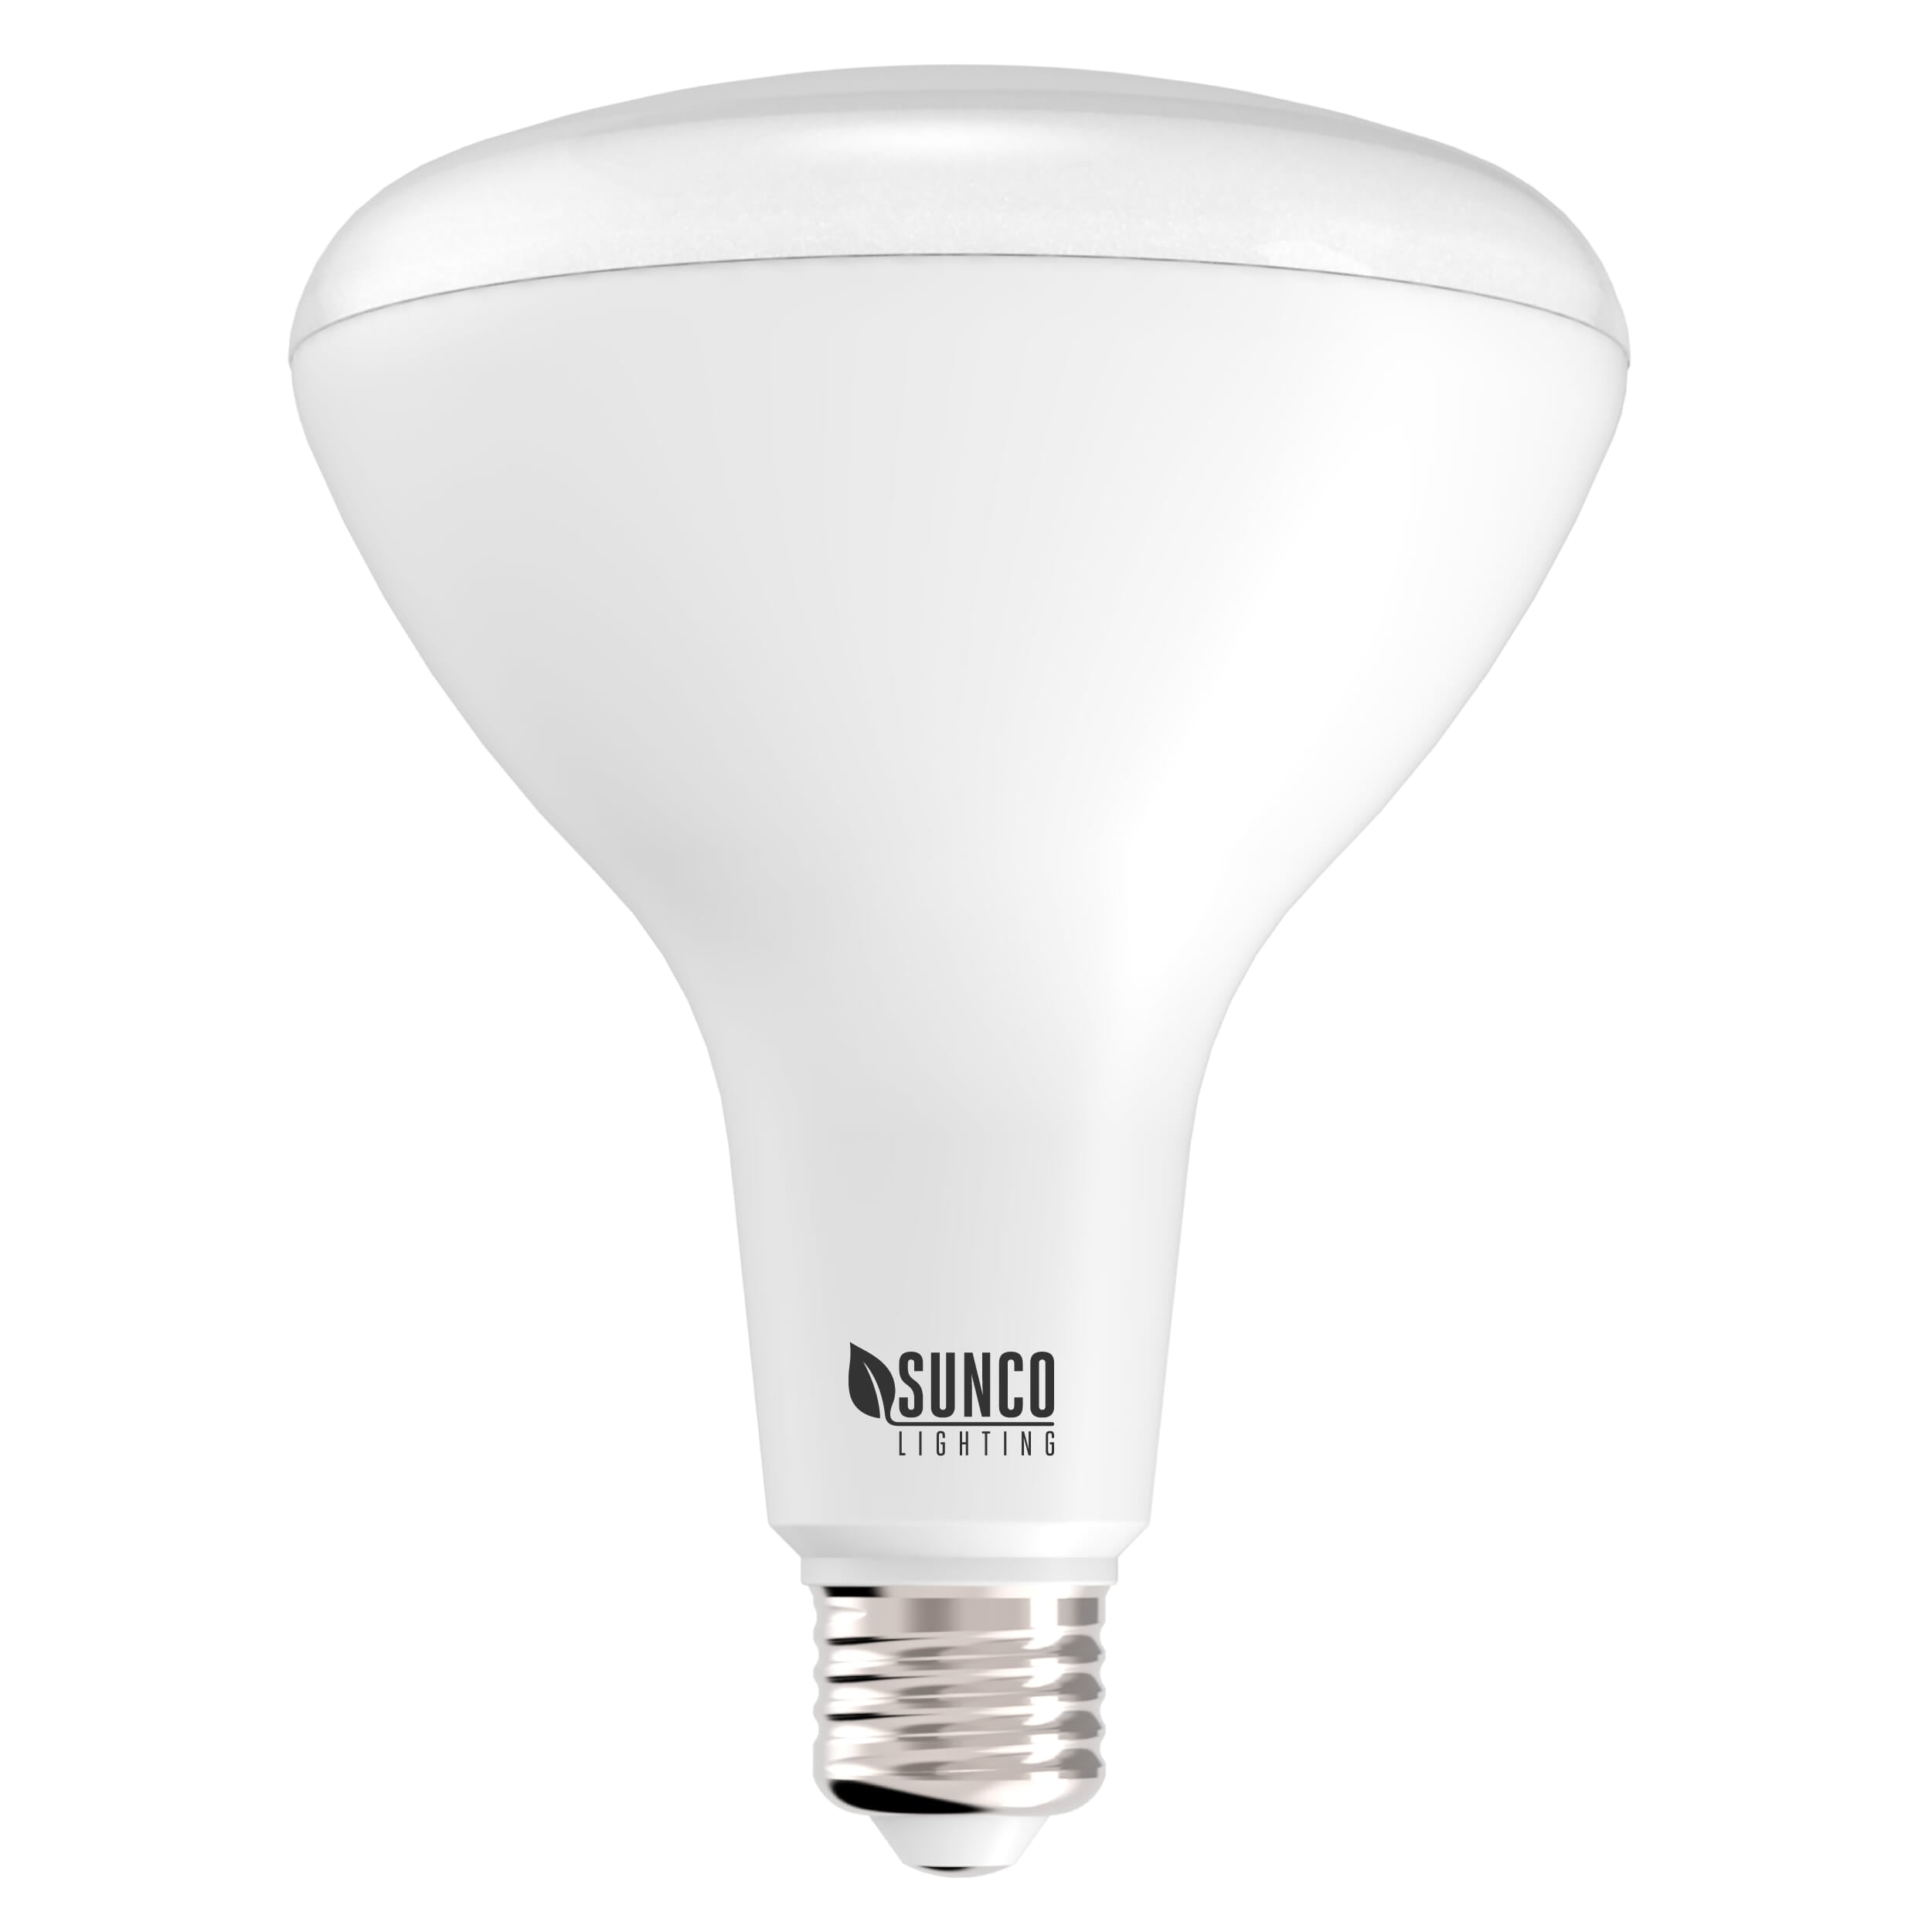 Sunco Lighting BR30 LED Bulb, 11W=65W, 6000K Daylight Deluxe, 850 LM, E26  Base, Dimmable, Indoor Flood Light for 5